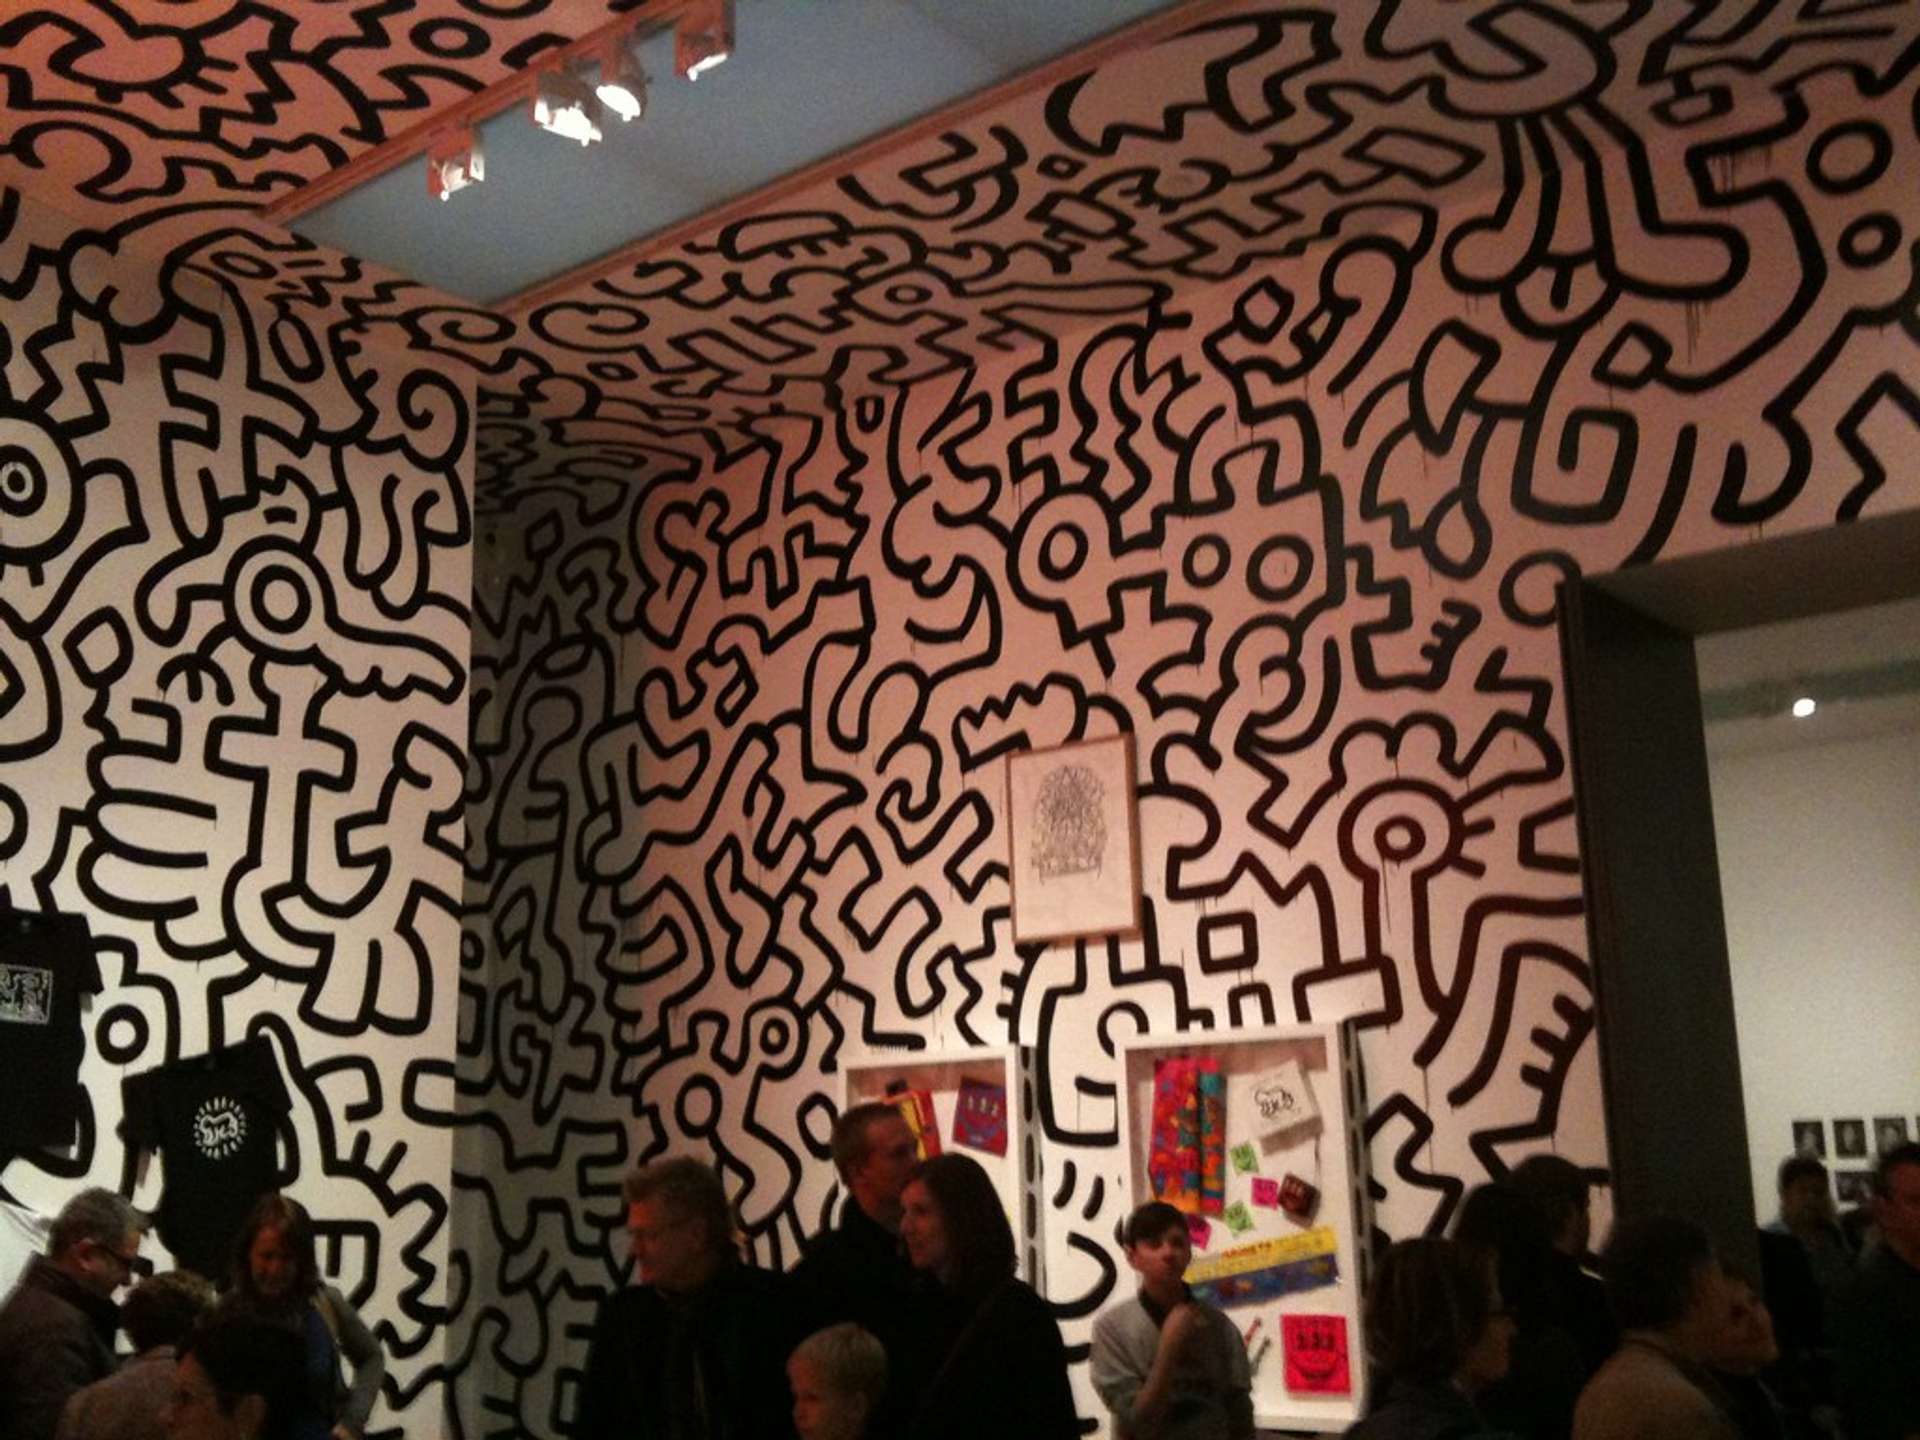 Pop Shop room at "Pop Life", Tate Modern, London (2009).